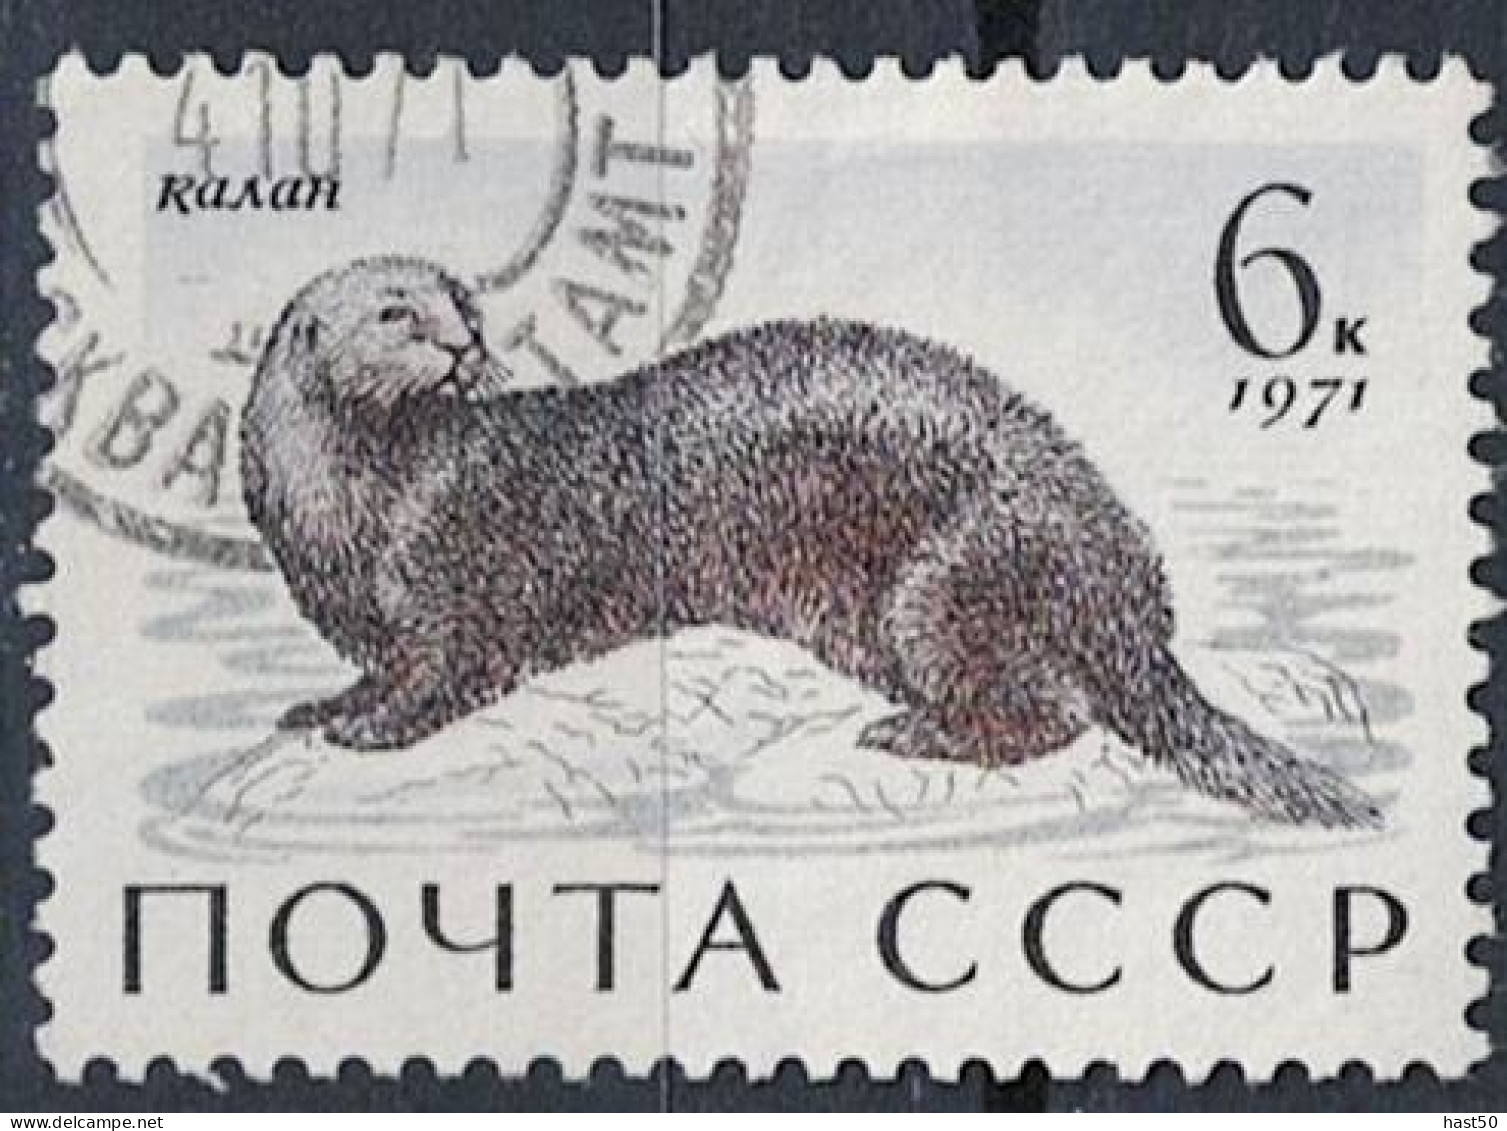 Sowjetunion UdSSR - Seeotter (Enhydra Lutris) (MiNr. 3914) 1971 - Gest Used Obl - Oblitérés